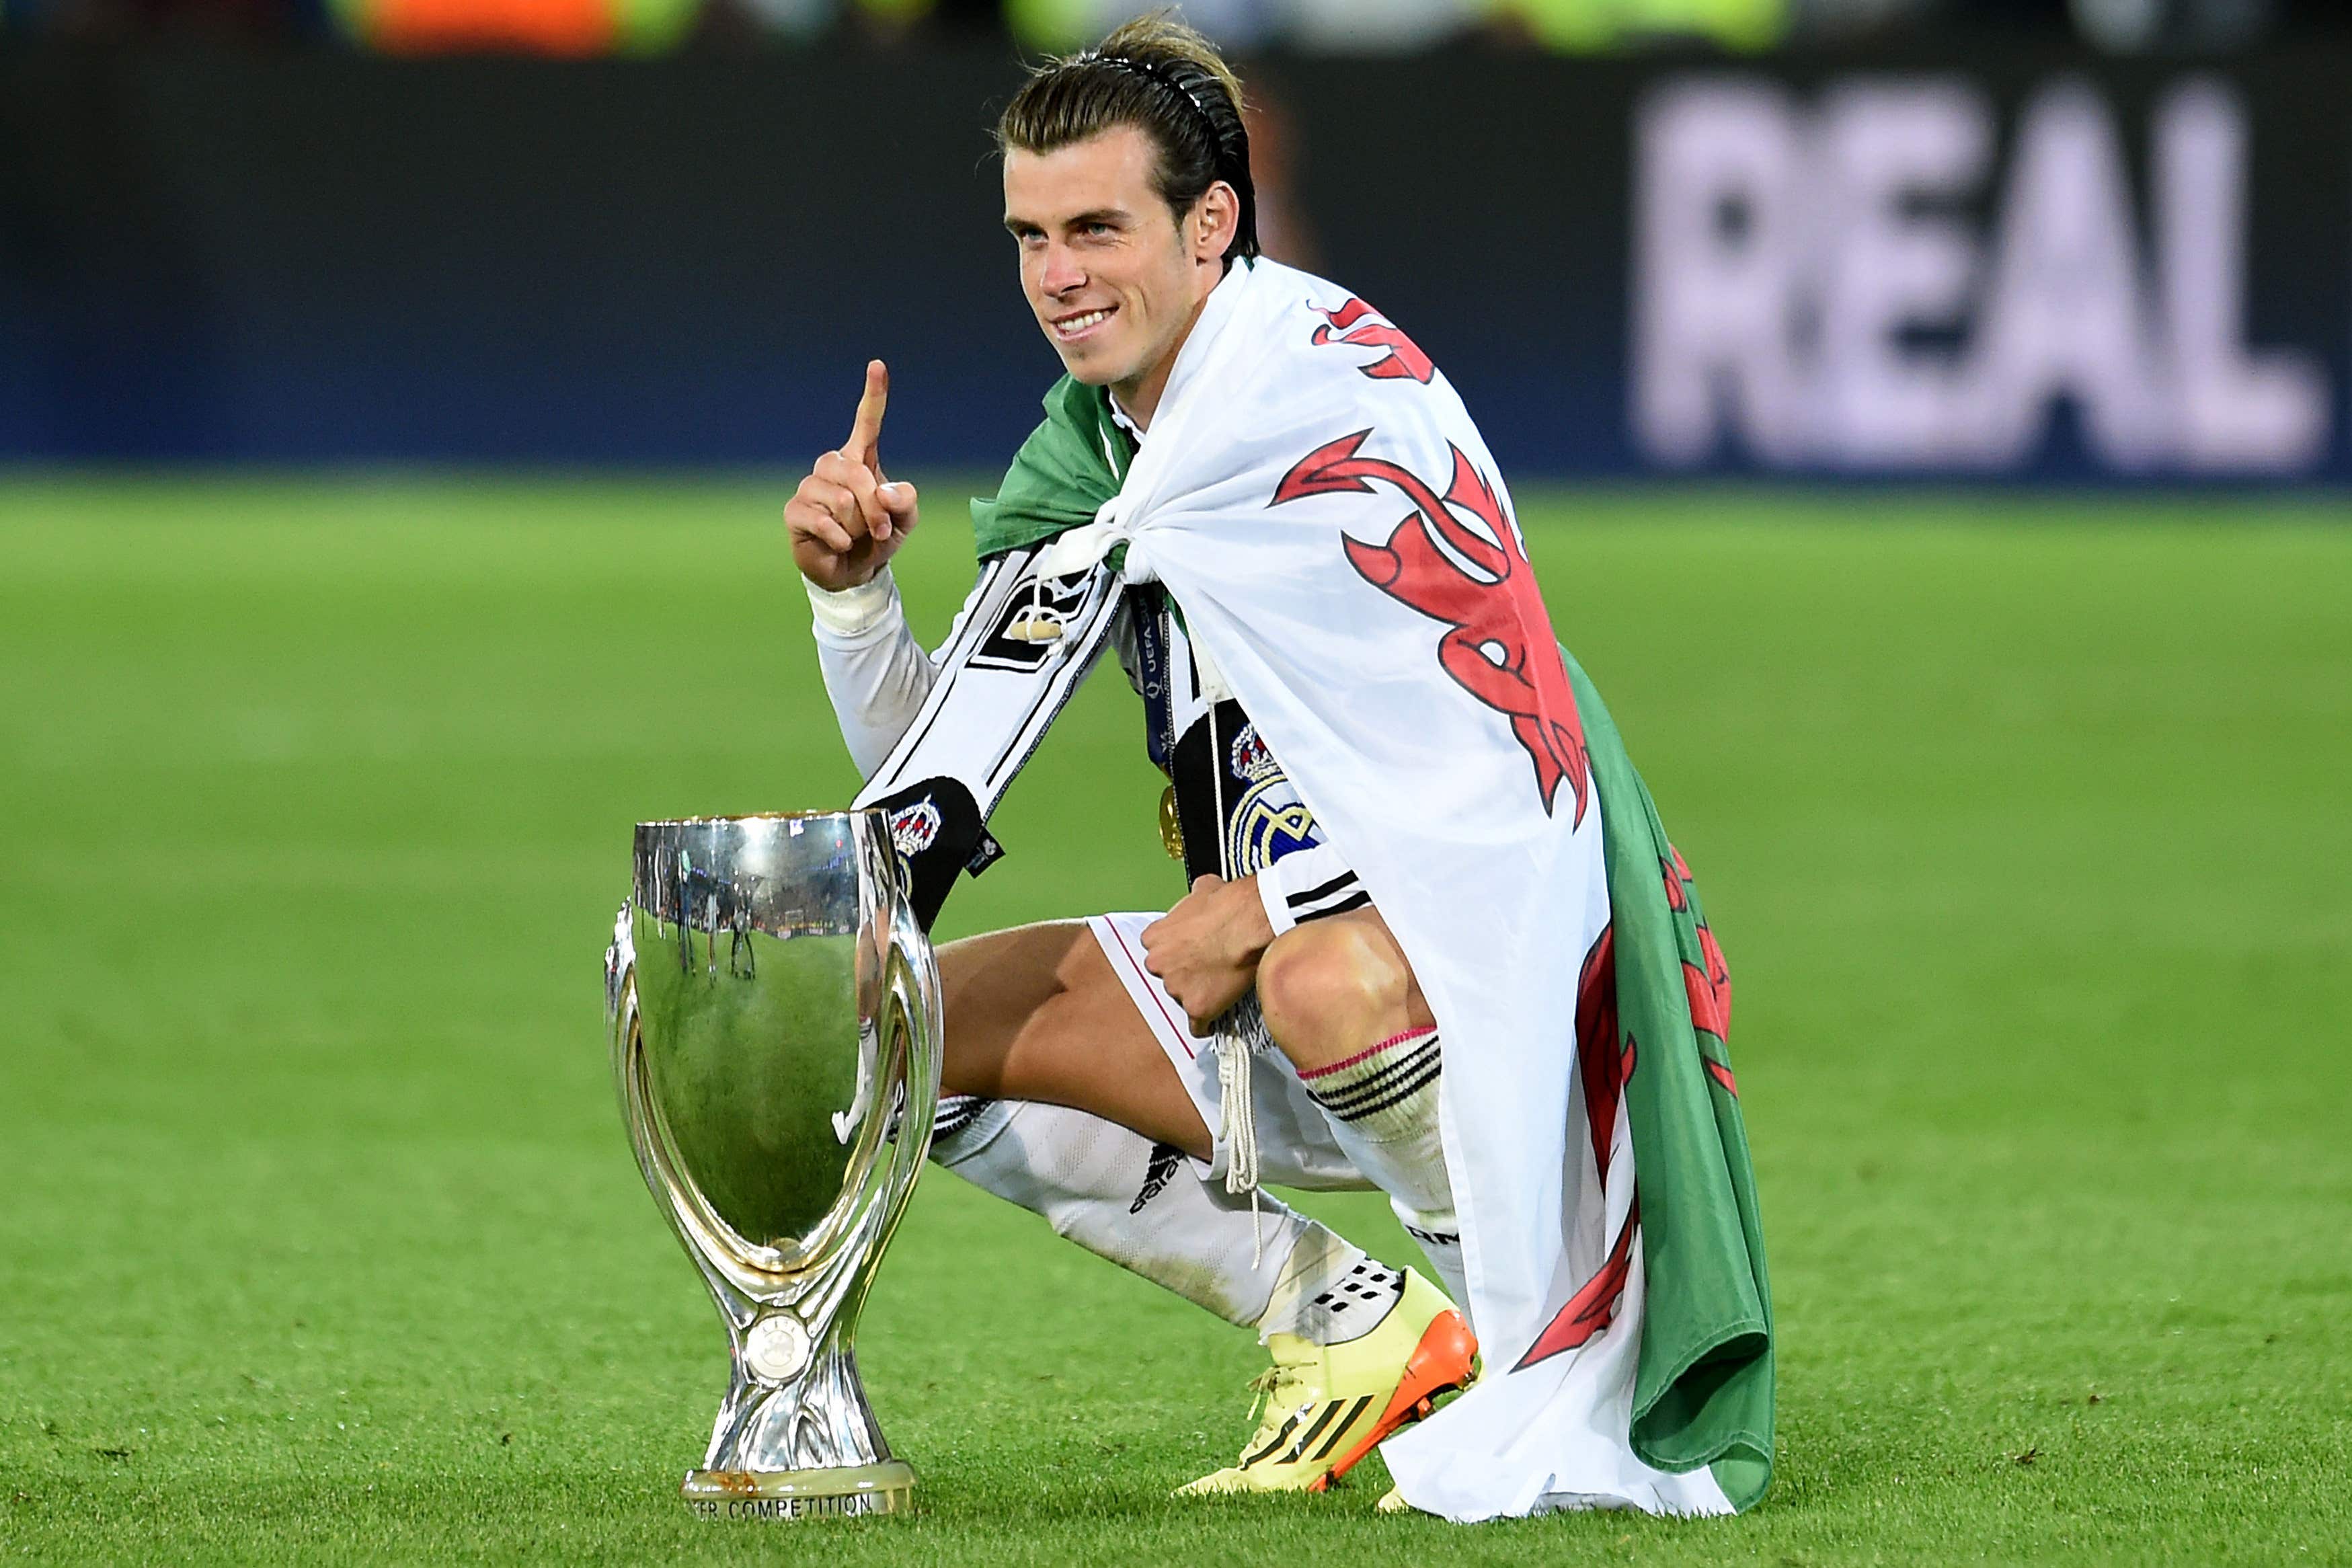 Former Tottenham great Gareth Bale retires from football